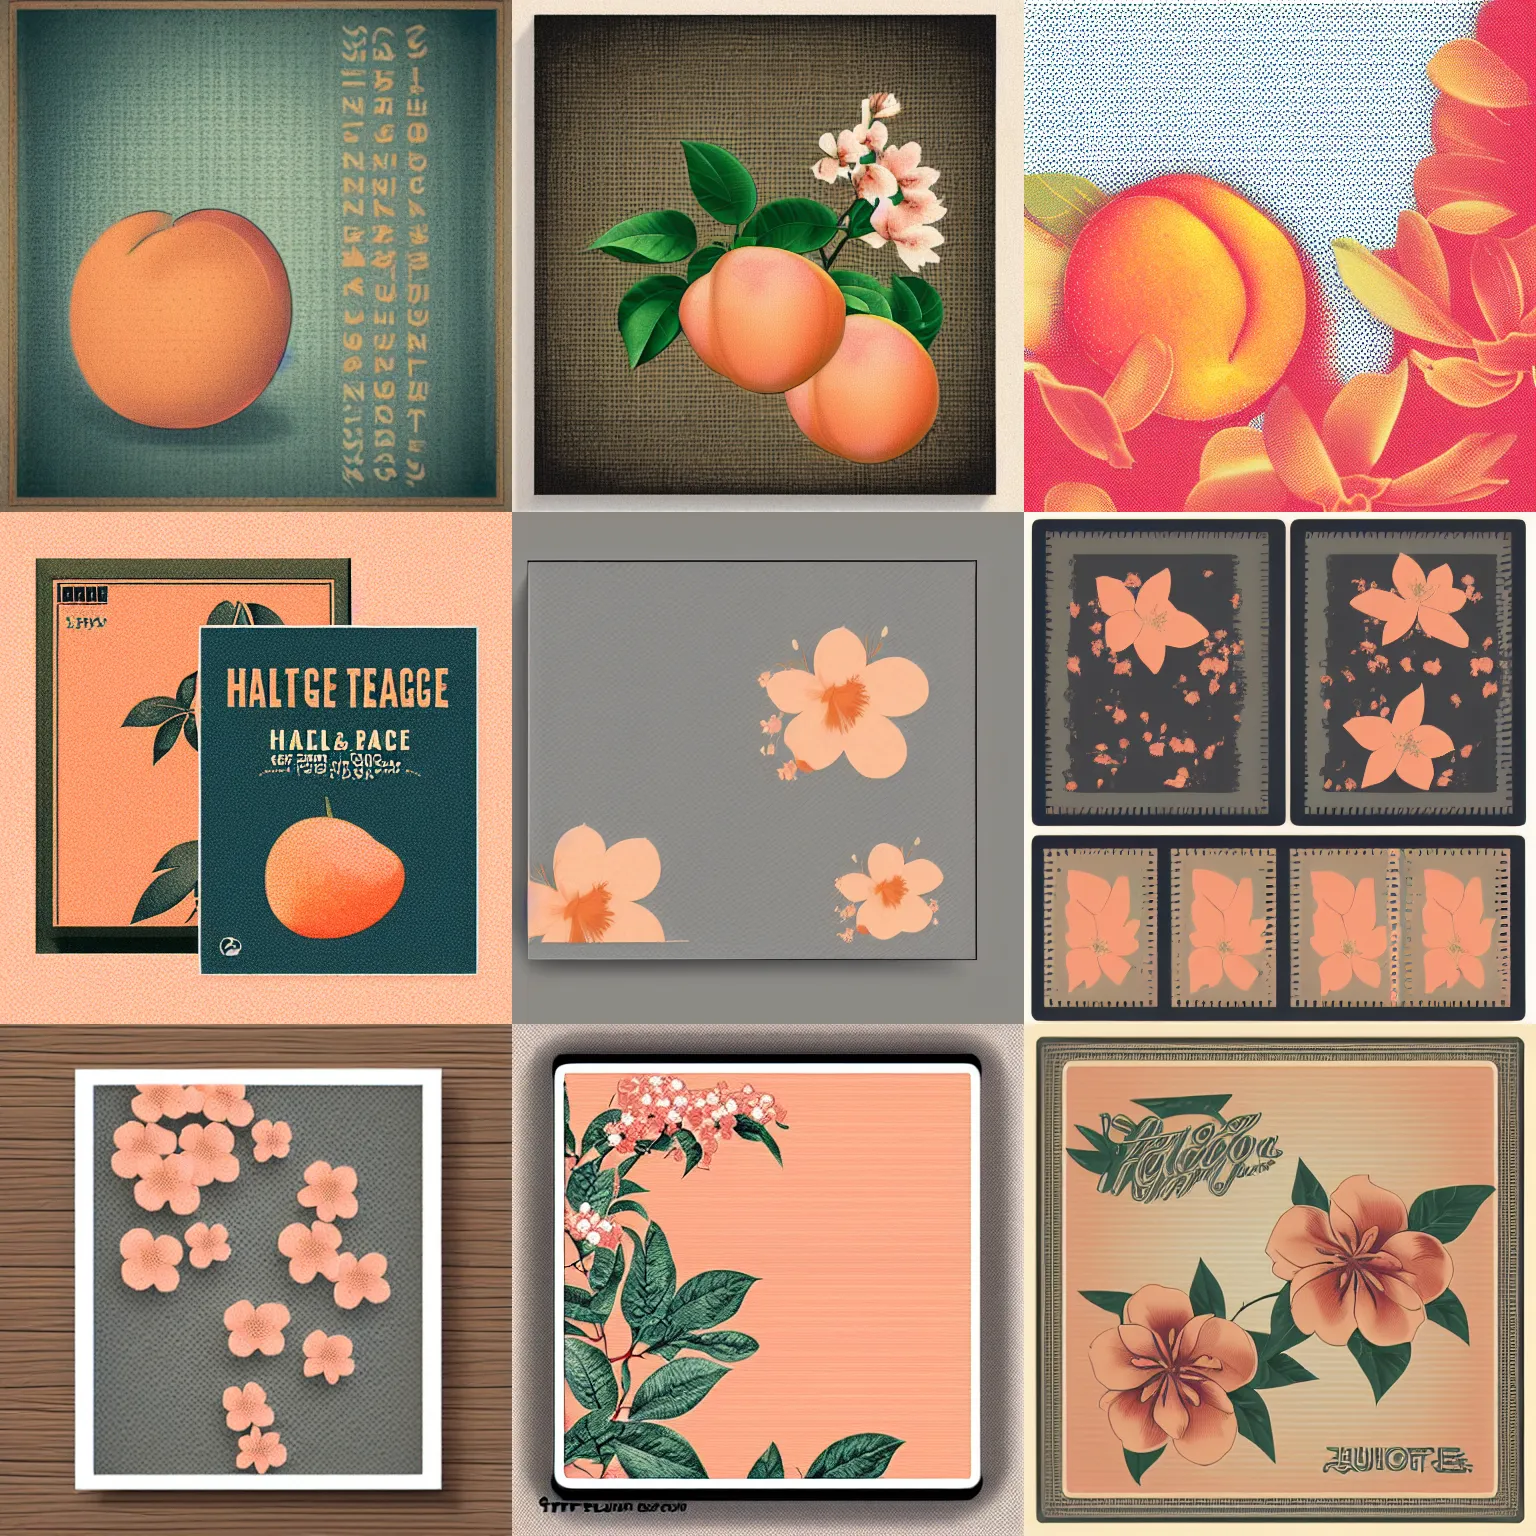 Prompt: vintage color halftone album artwork large peach and one blossom illustration, nostalgic high saturation, grainy film, neutral blank grey background